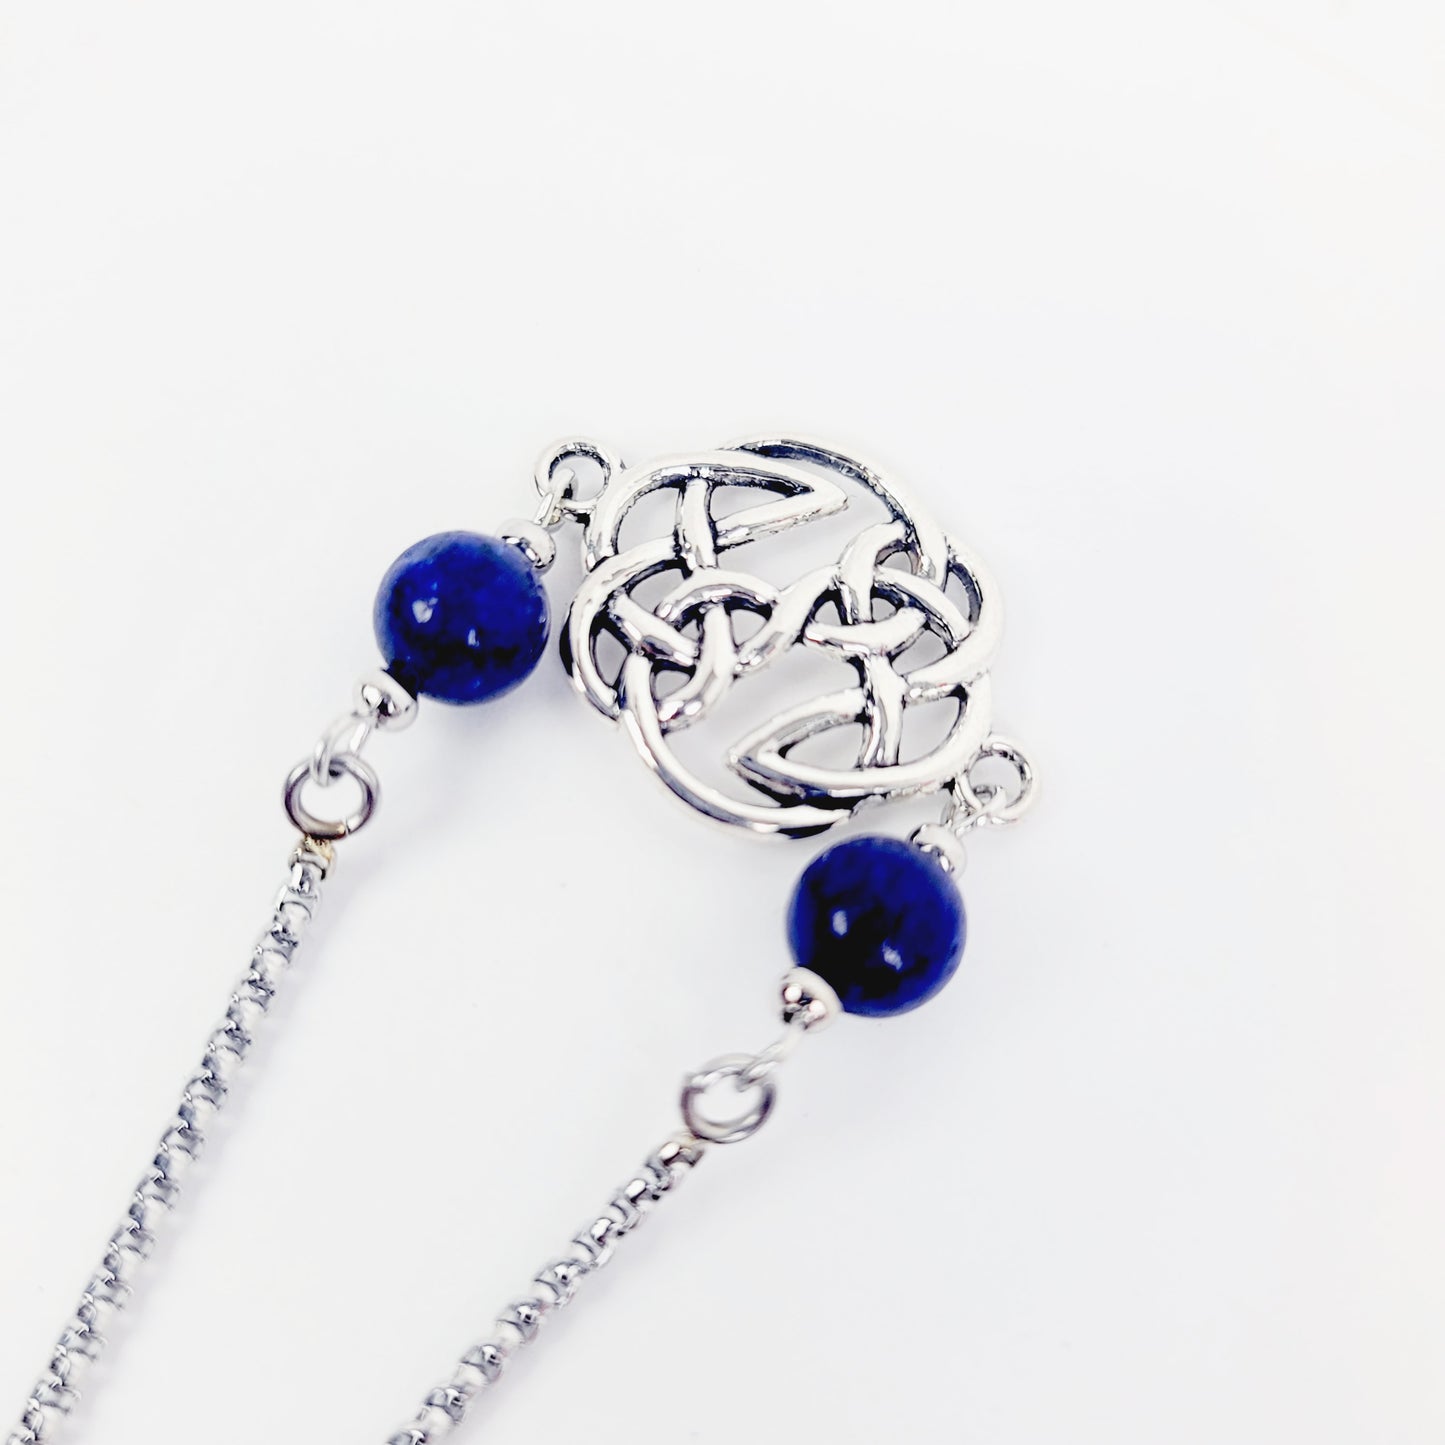 Penis Noose Chain Bracelet with Celtic Sheild Knot and Lapis Lazuli.